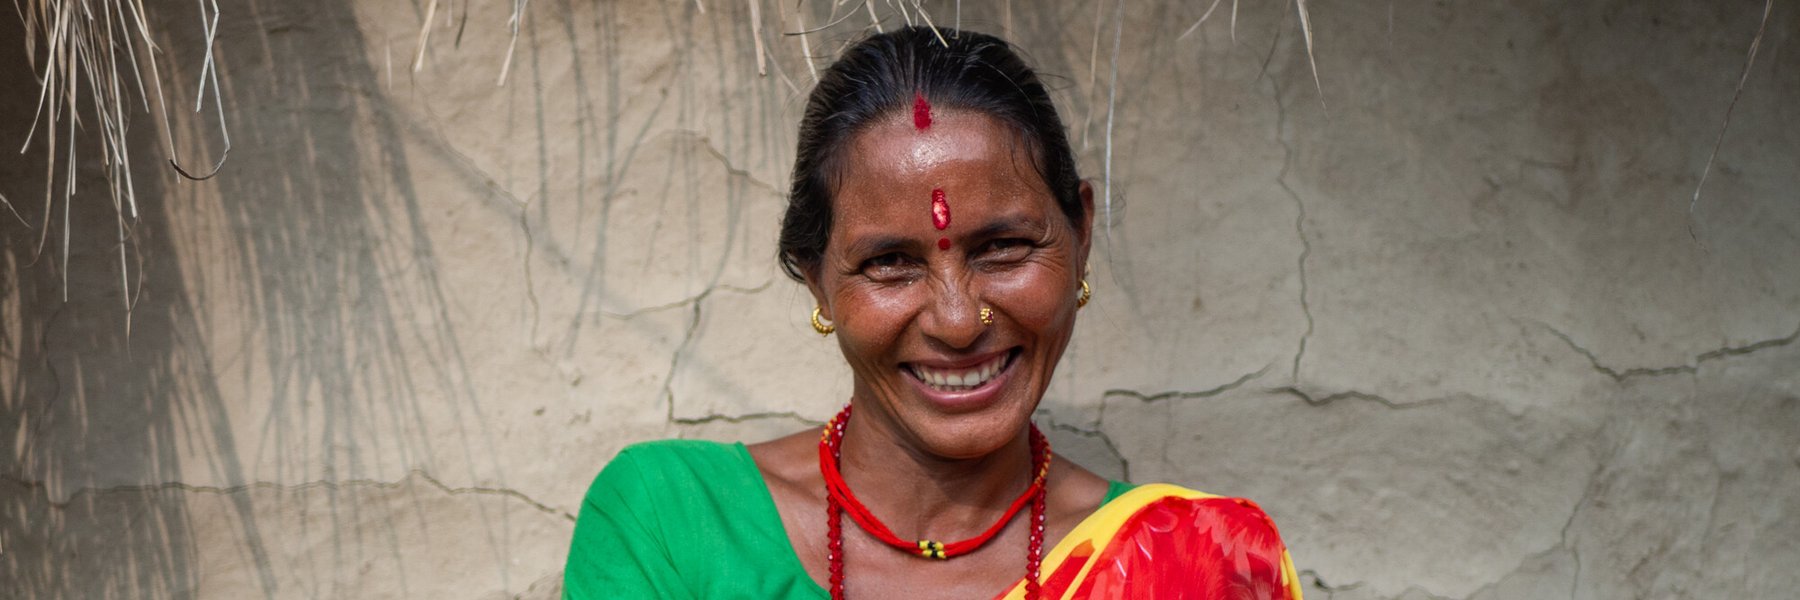 Bimala Devi Bhatta holds garlic grown by members of her community’s women’s group